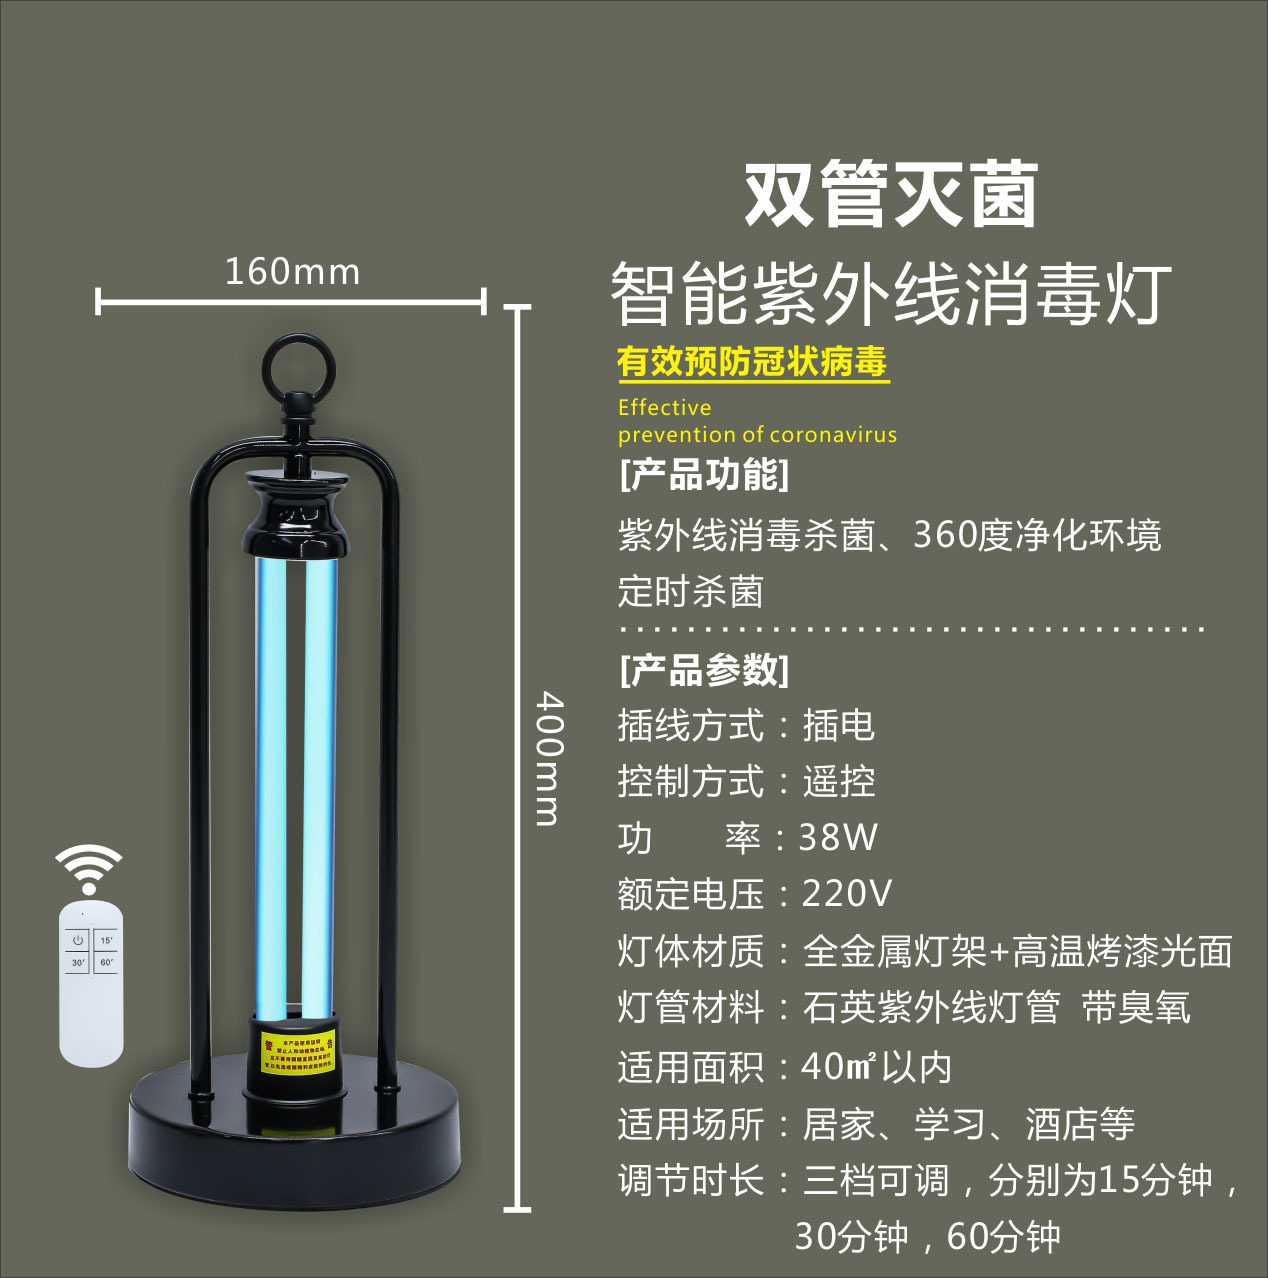 Ultraviolet sterilization lamp